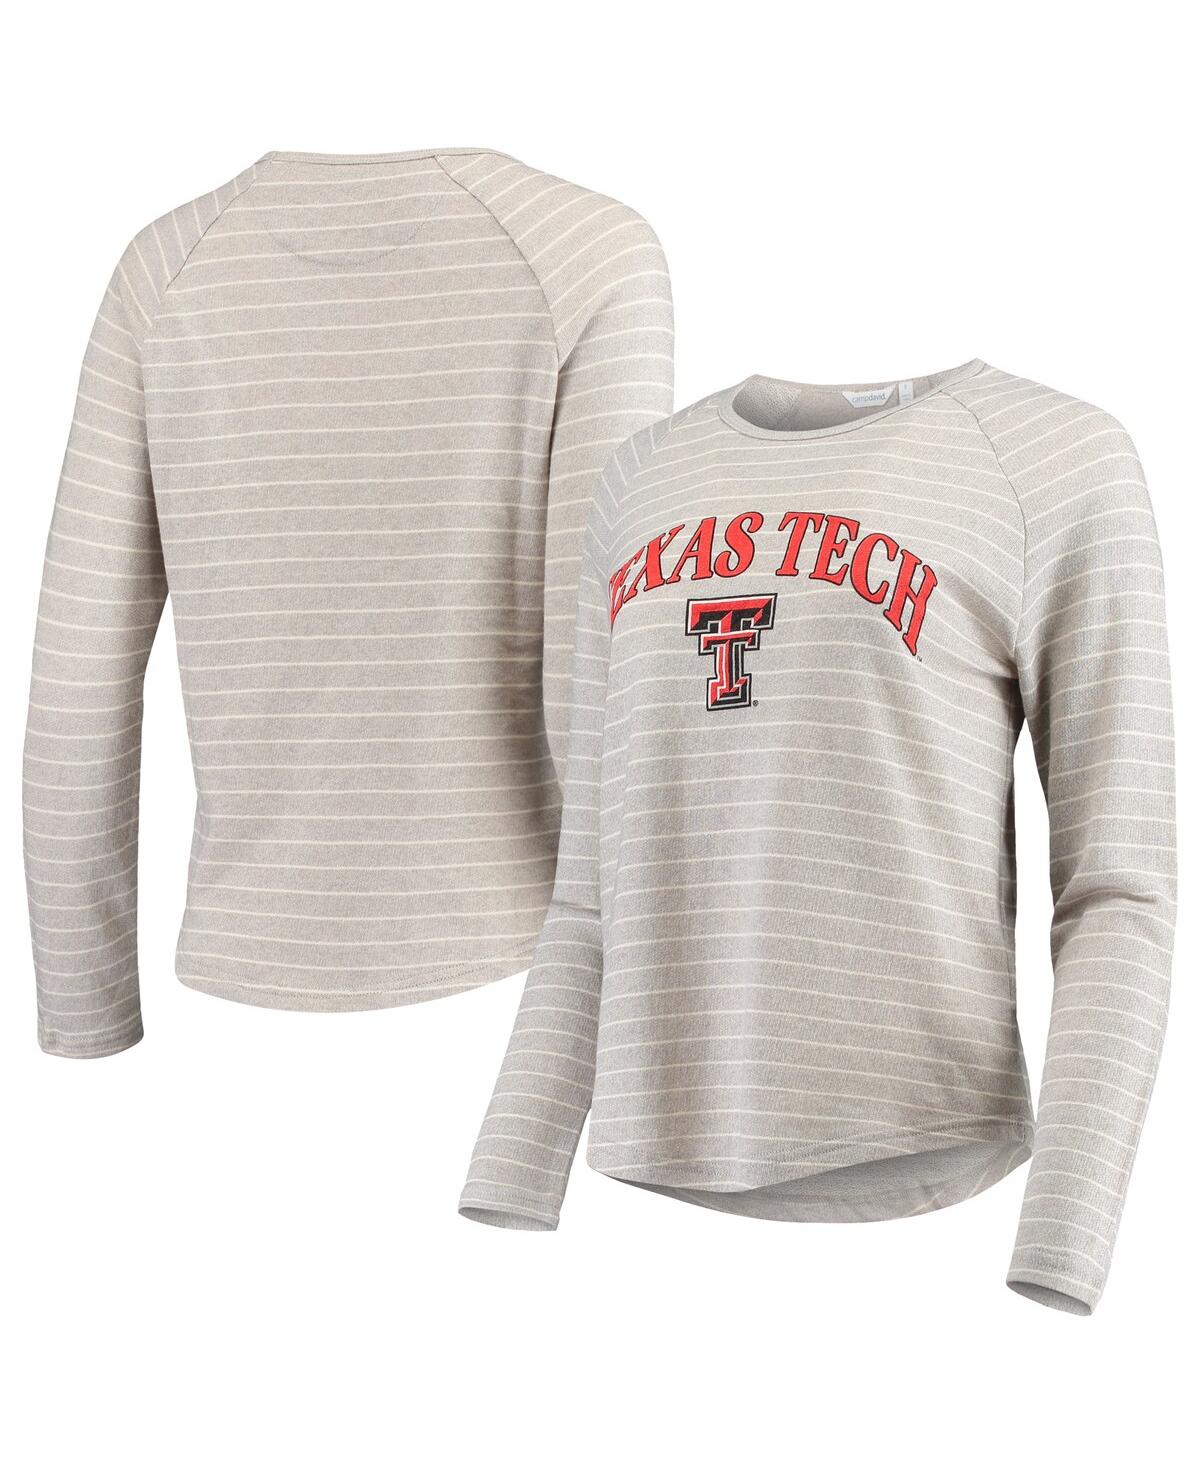 Women's Heathered Gray Texas Tech Red Raiders Seaside Striped French Terry Raglan Pullover Sweatshirt - Heathered Gray